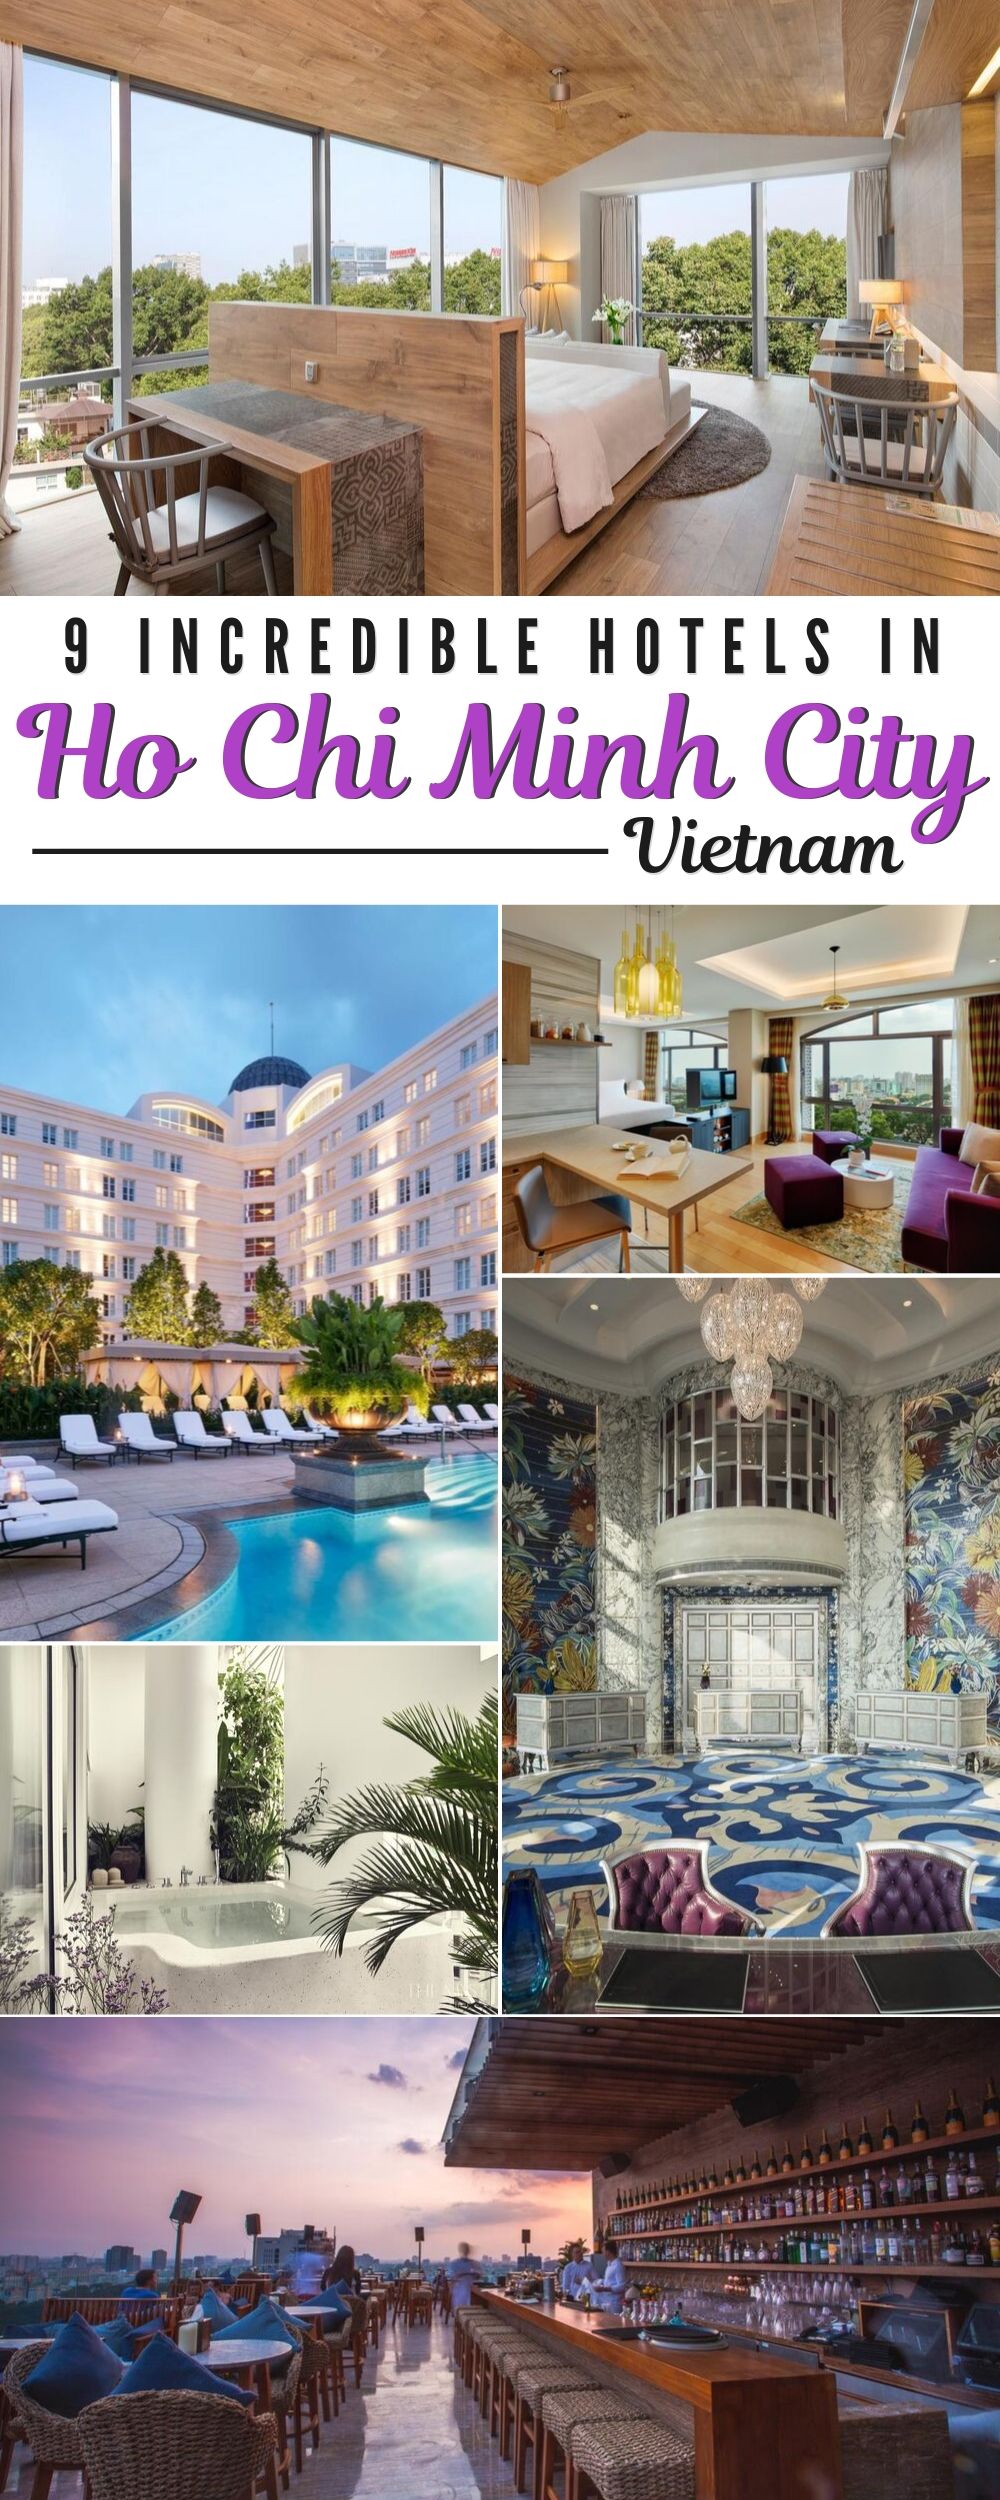 The Best Hotels in Ho Chi Minh City (Saigon), Vietnam on Pinterest